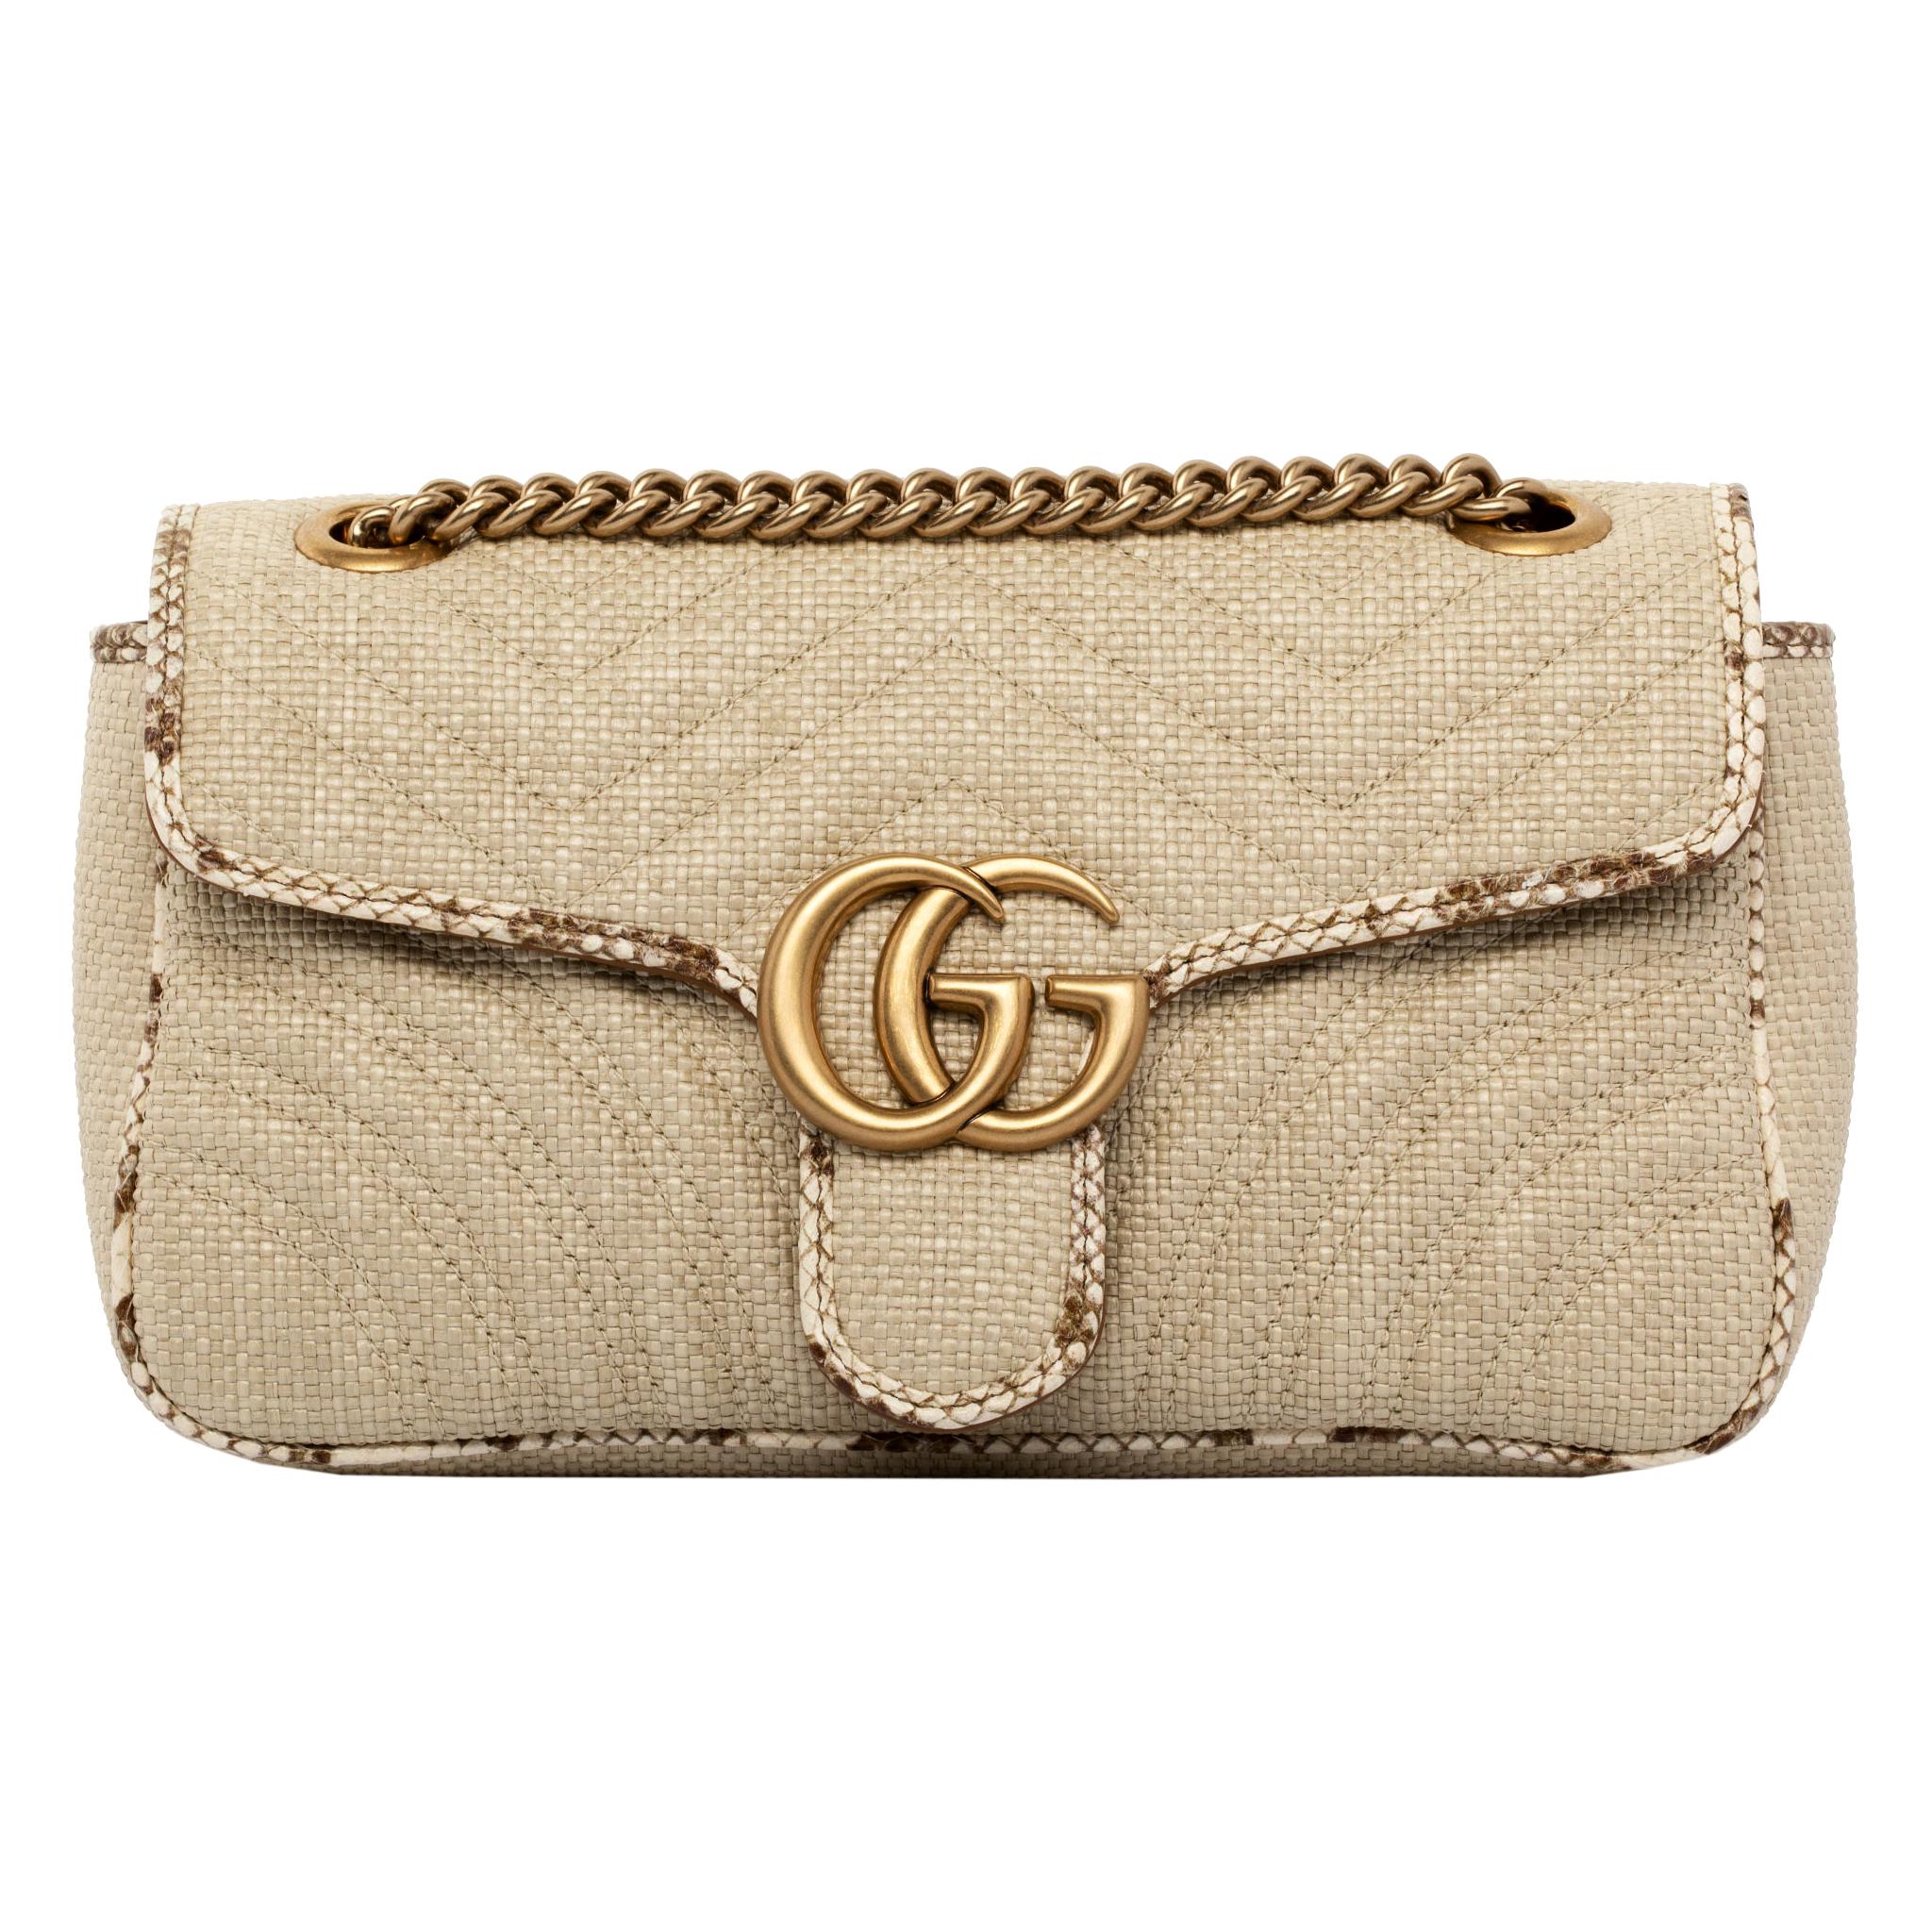 1stdibs Exclusive Gucci GG Marmont Shoulder Bag Braided Wicker & Python Trim